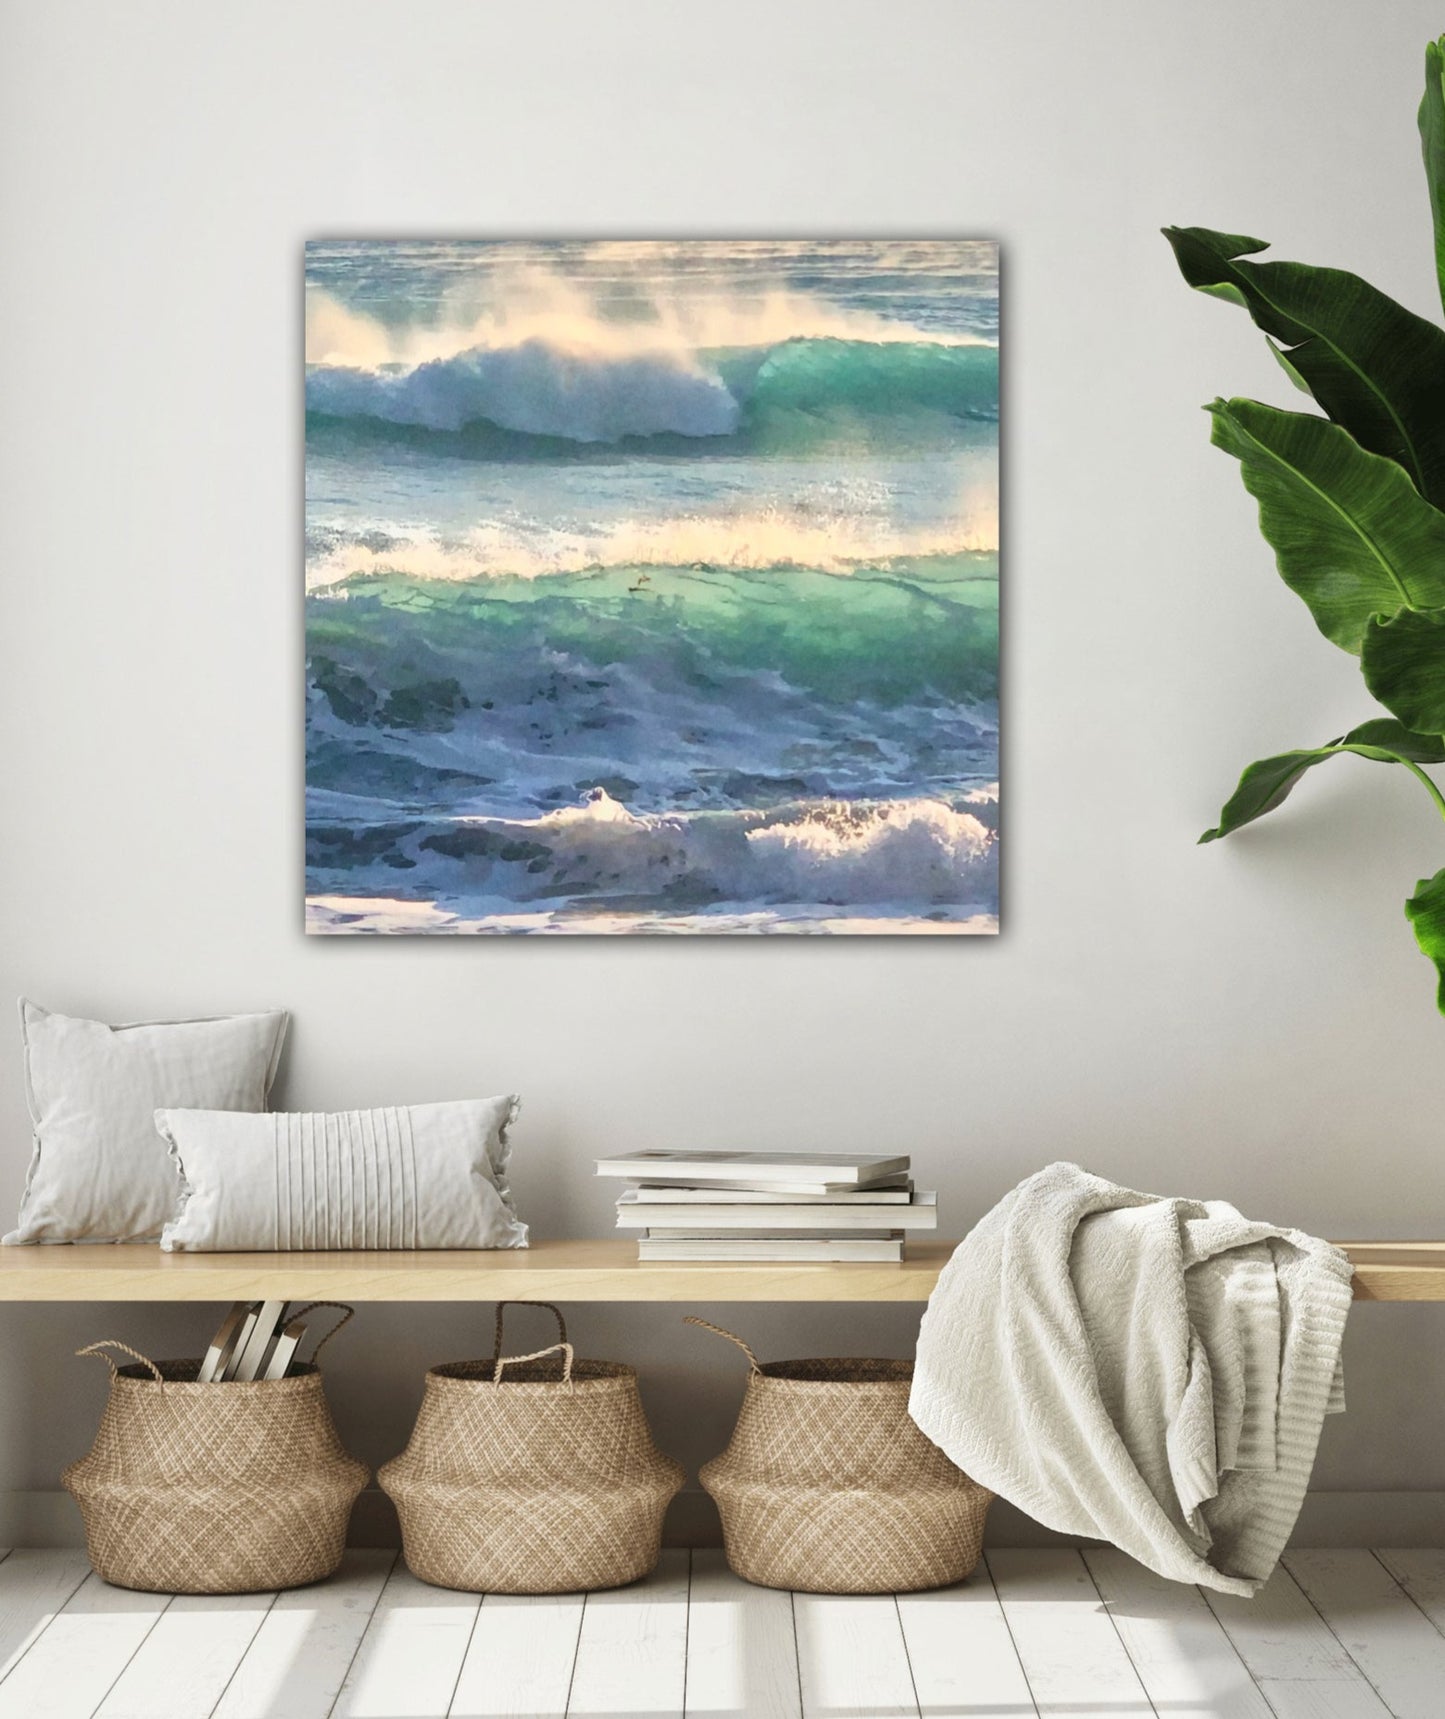 emerald fog seascape canvas print by Jacqueline mb designs 